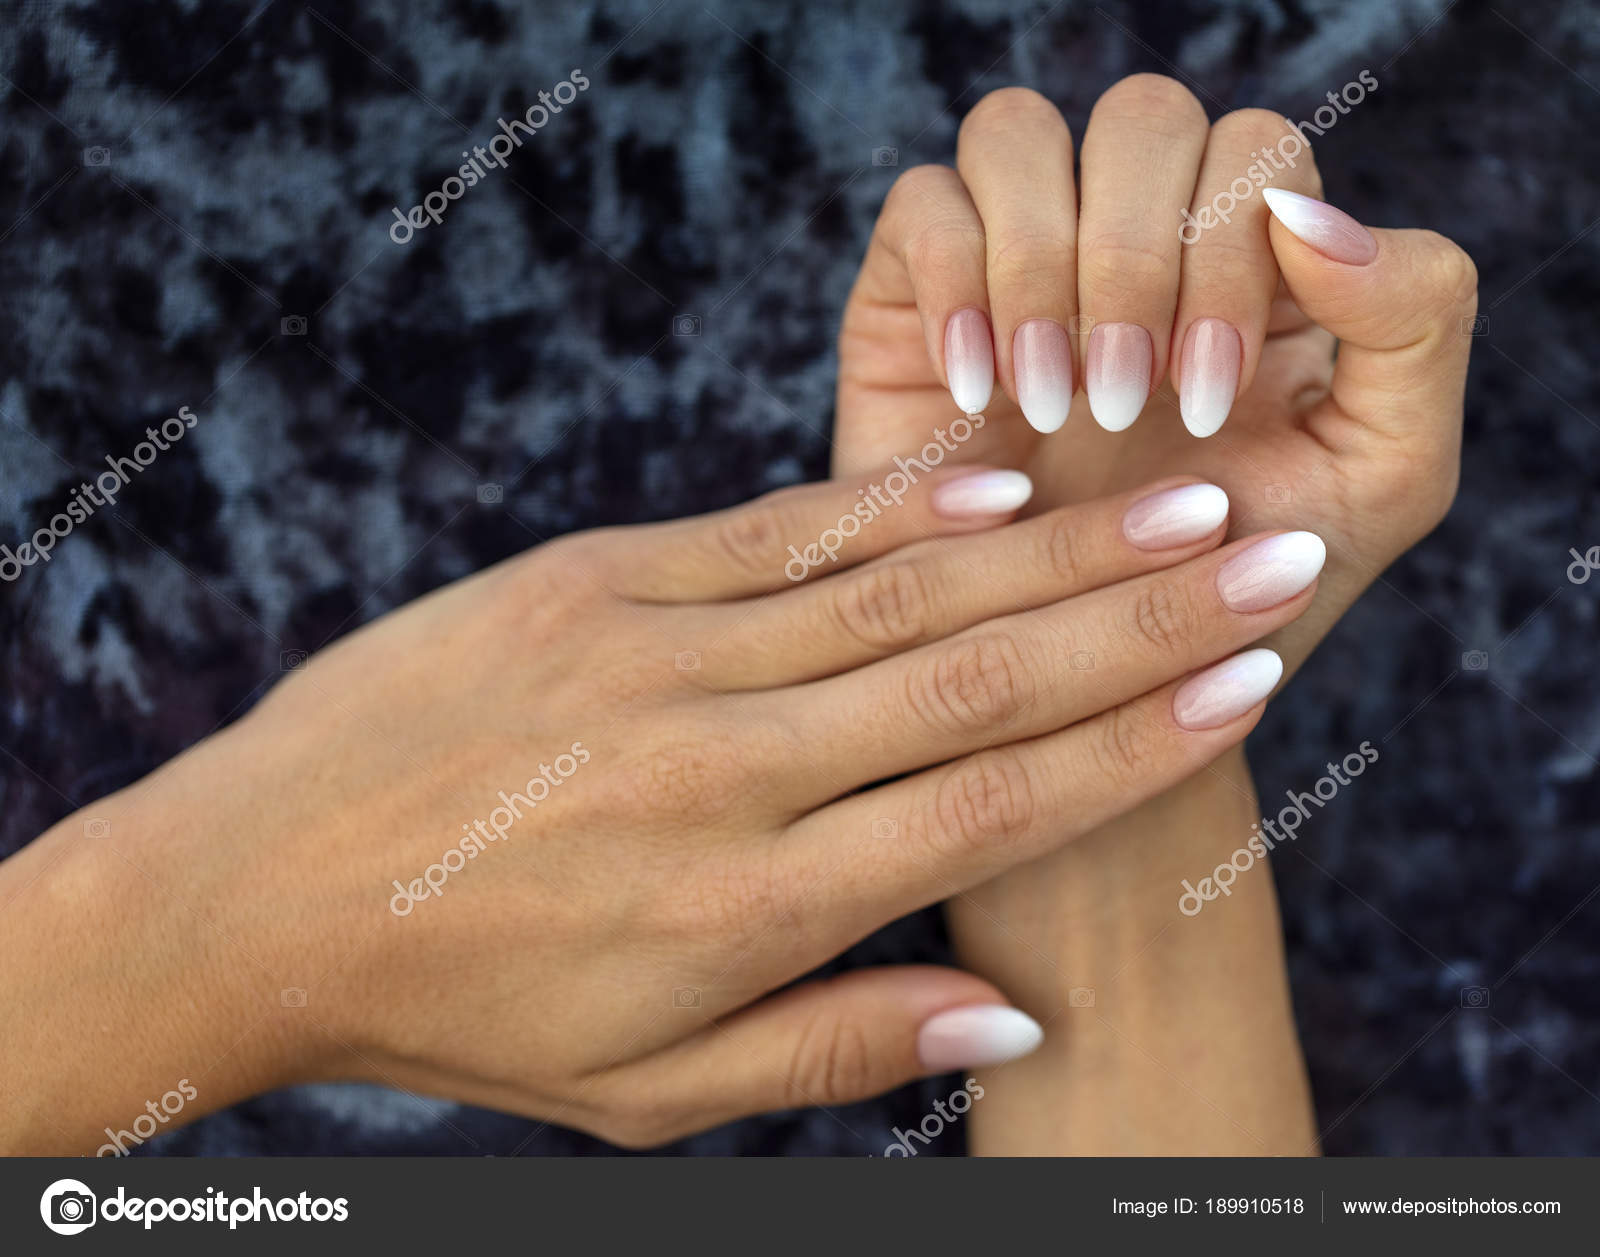 Cute Peach Nails Manicure Design French Ombre Peach And White Stock Photo C Photosergii Gmail Com 189910518